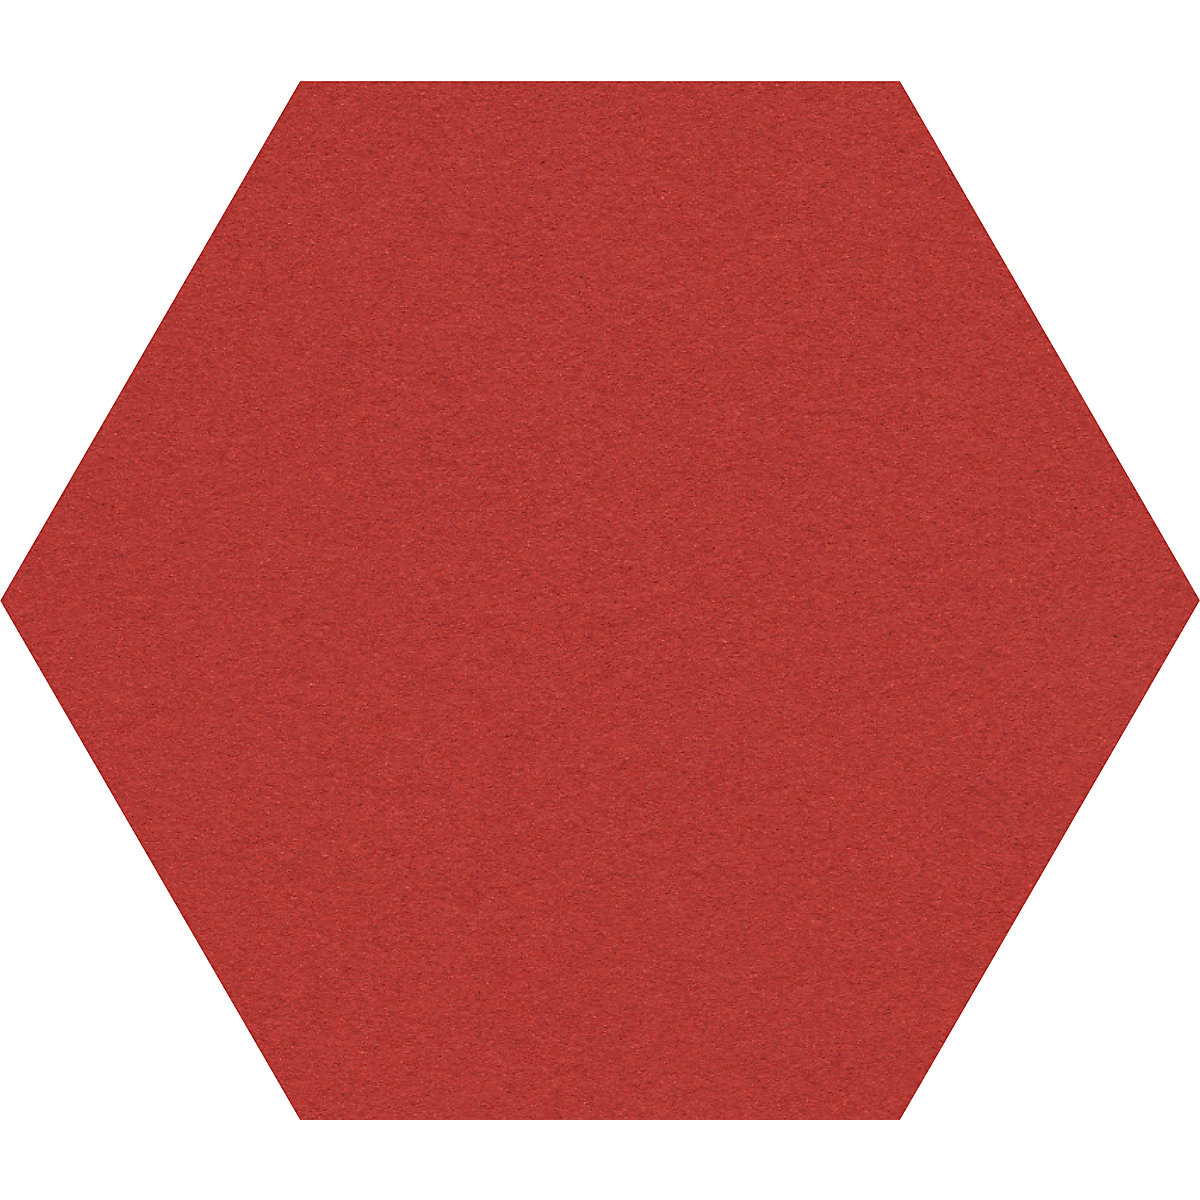 Hexagonal designer pin board – Chameleon, cork, WxH 600 x 600 mm, red-37